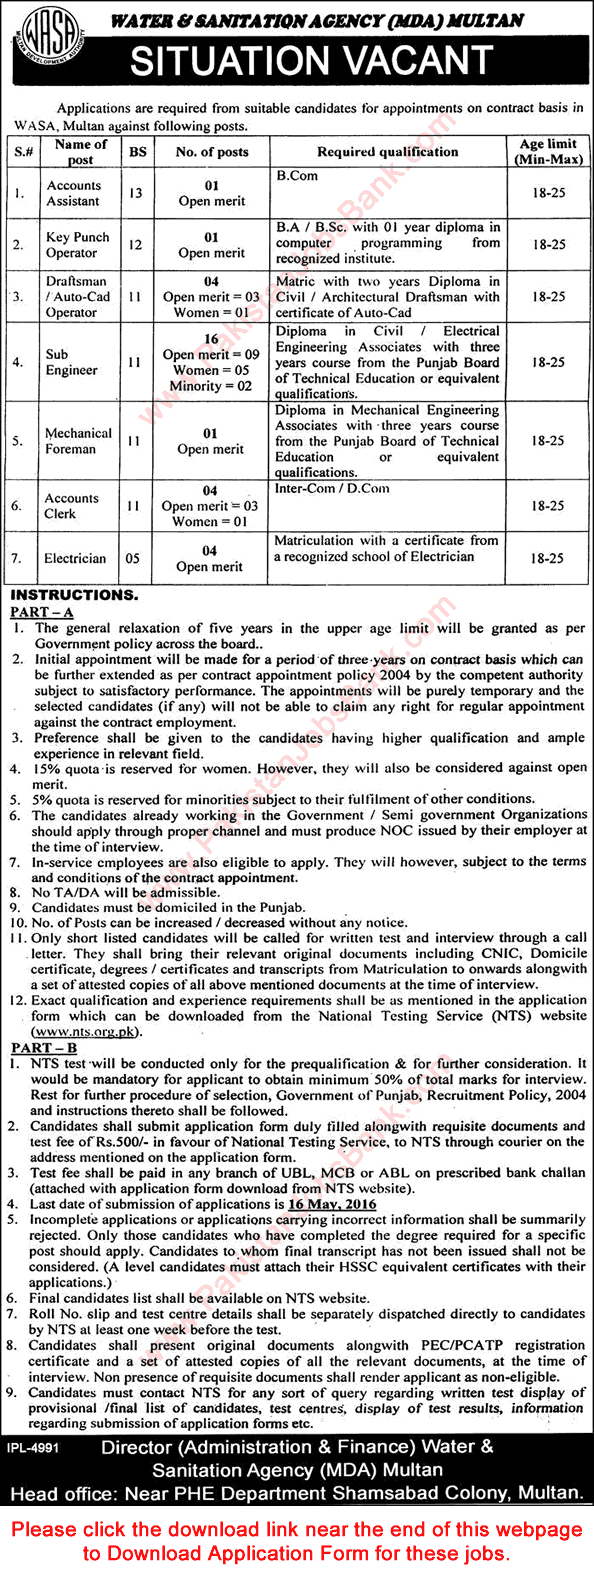 WASA Multan Jobs April 2016 MDA NTS Application Form Sub Engineers, Draftsmen, Accounts Clerks & Others Latest